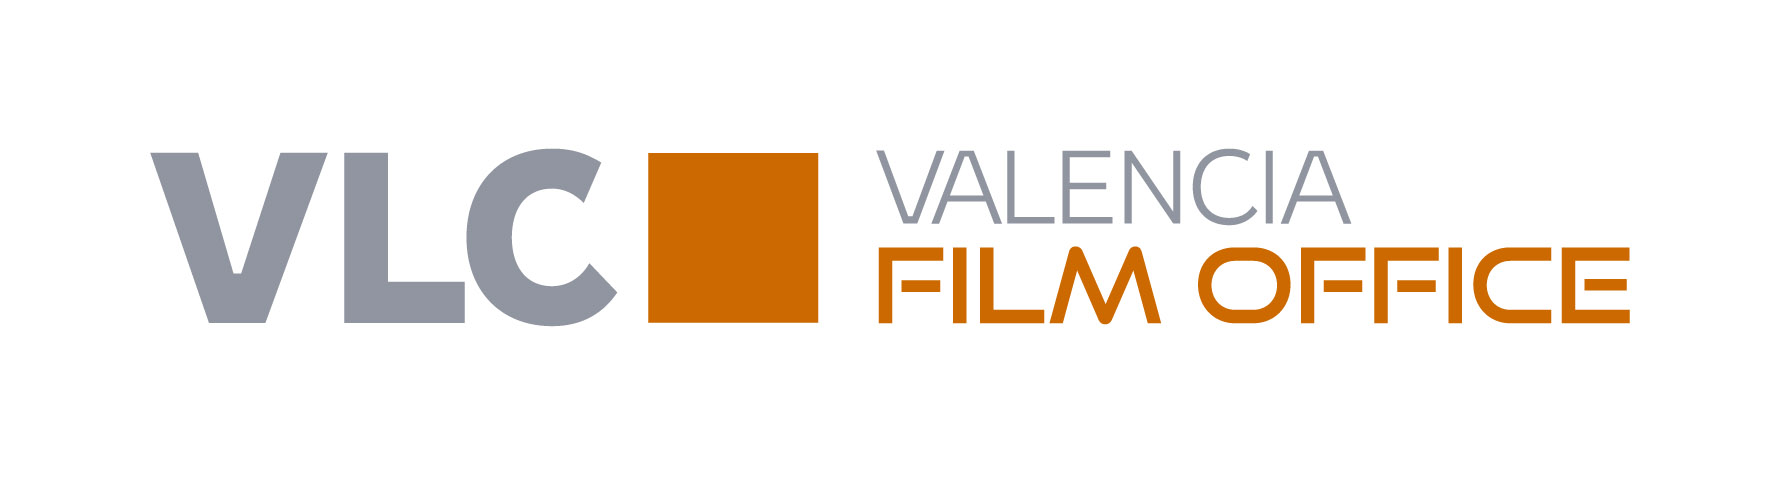 Valencia Film Office